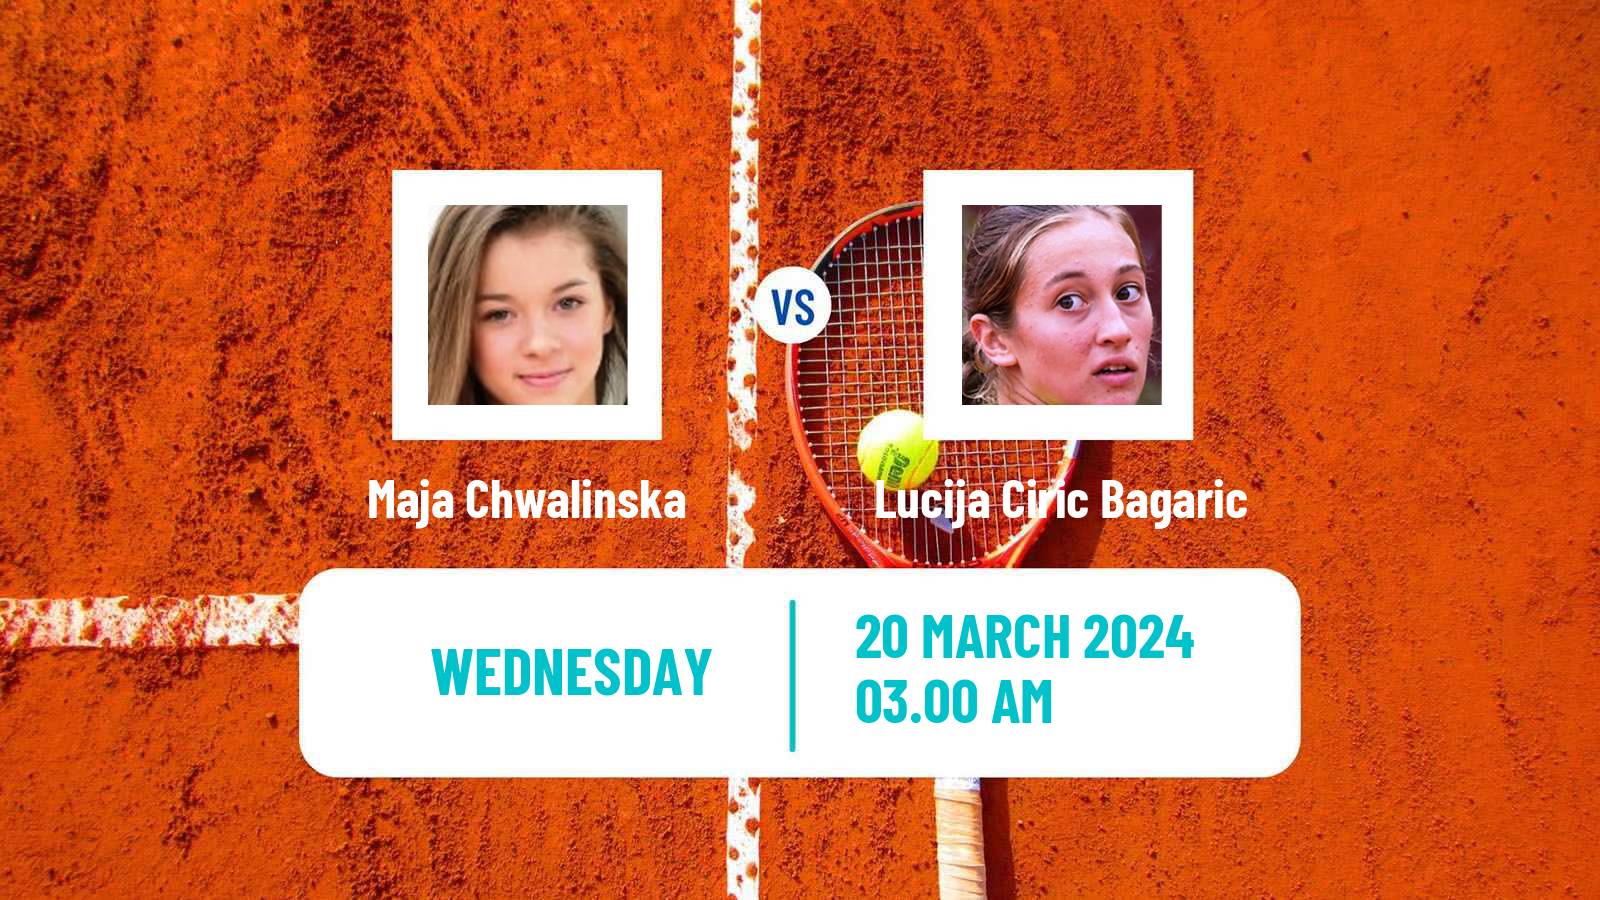 Tennis ITF W35 Alaminos Larnaca 2 Women Maja Chwalinska - Lucija Ciric Bagaric